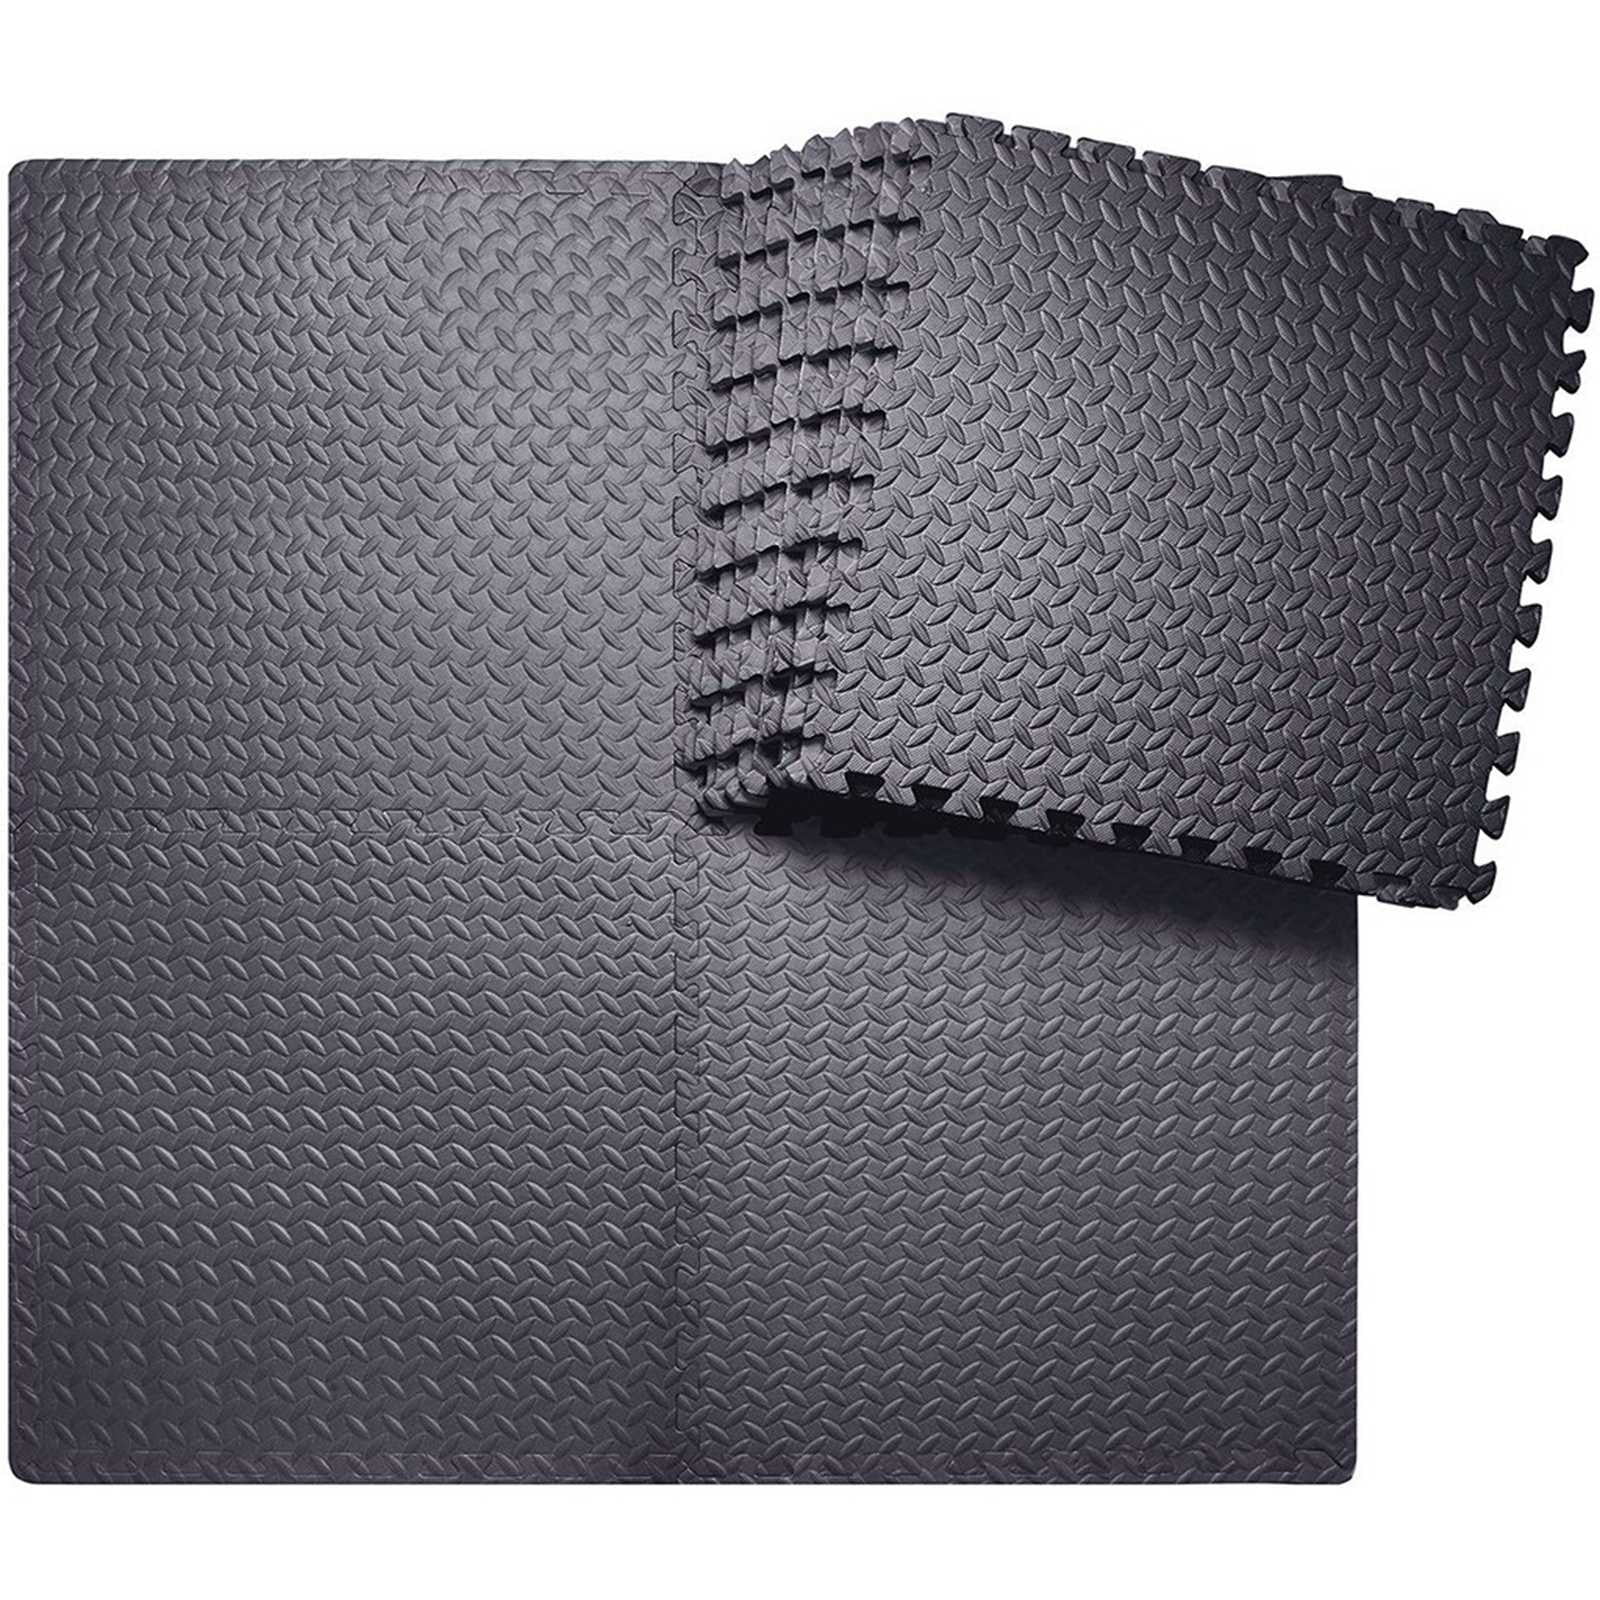 Details about   216 SqFt Interlace Puzzle Rubber Foam Gym Fitness Exercise Tile Floor Mat New 